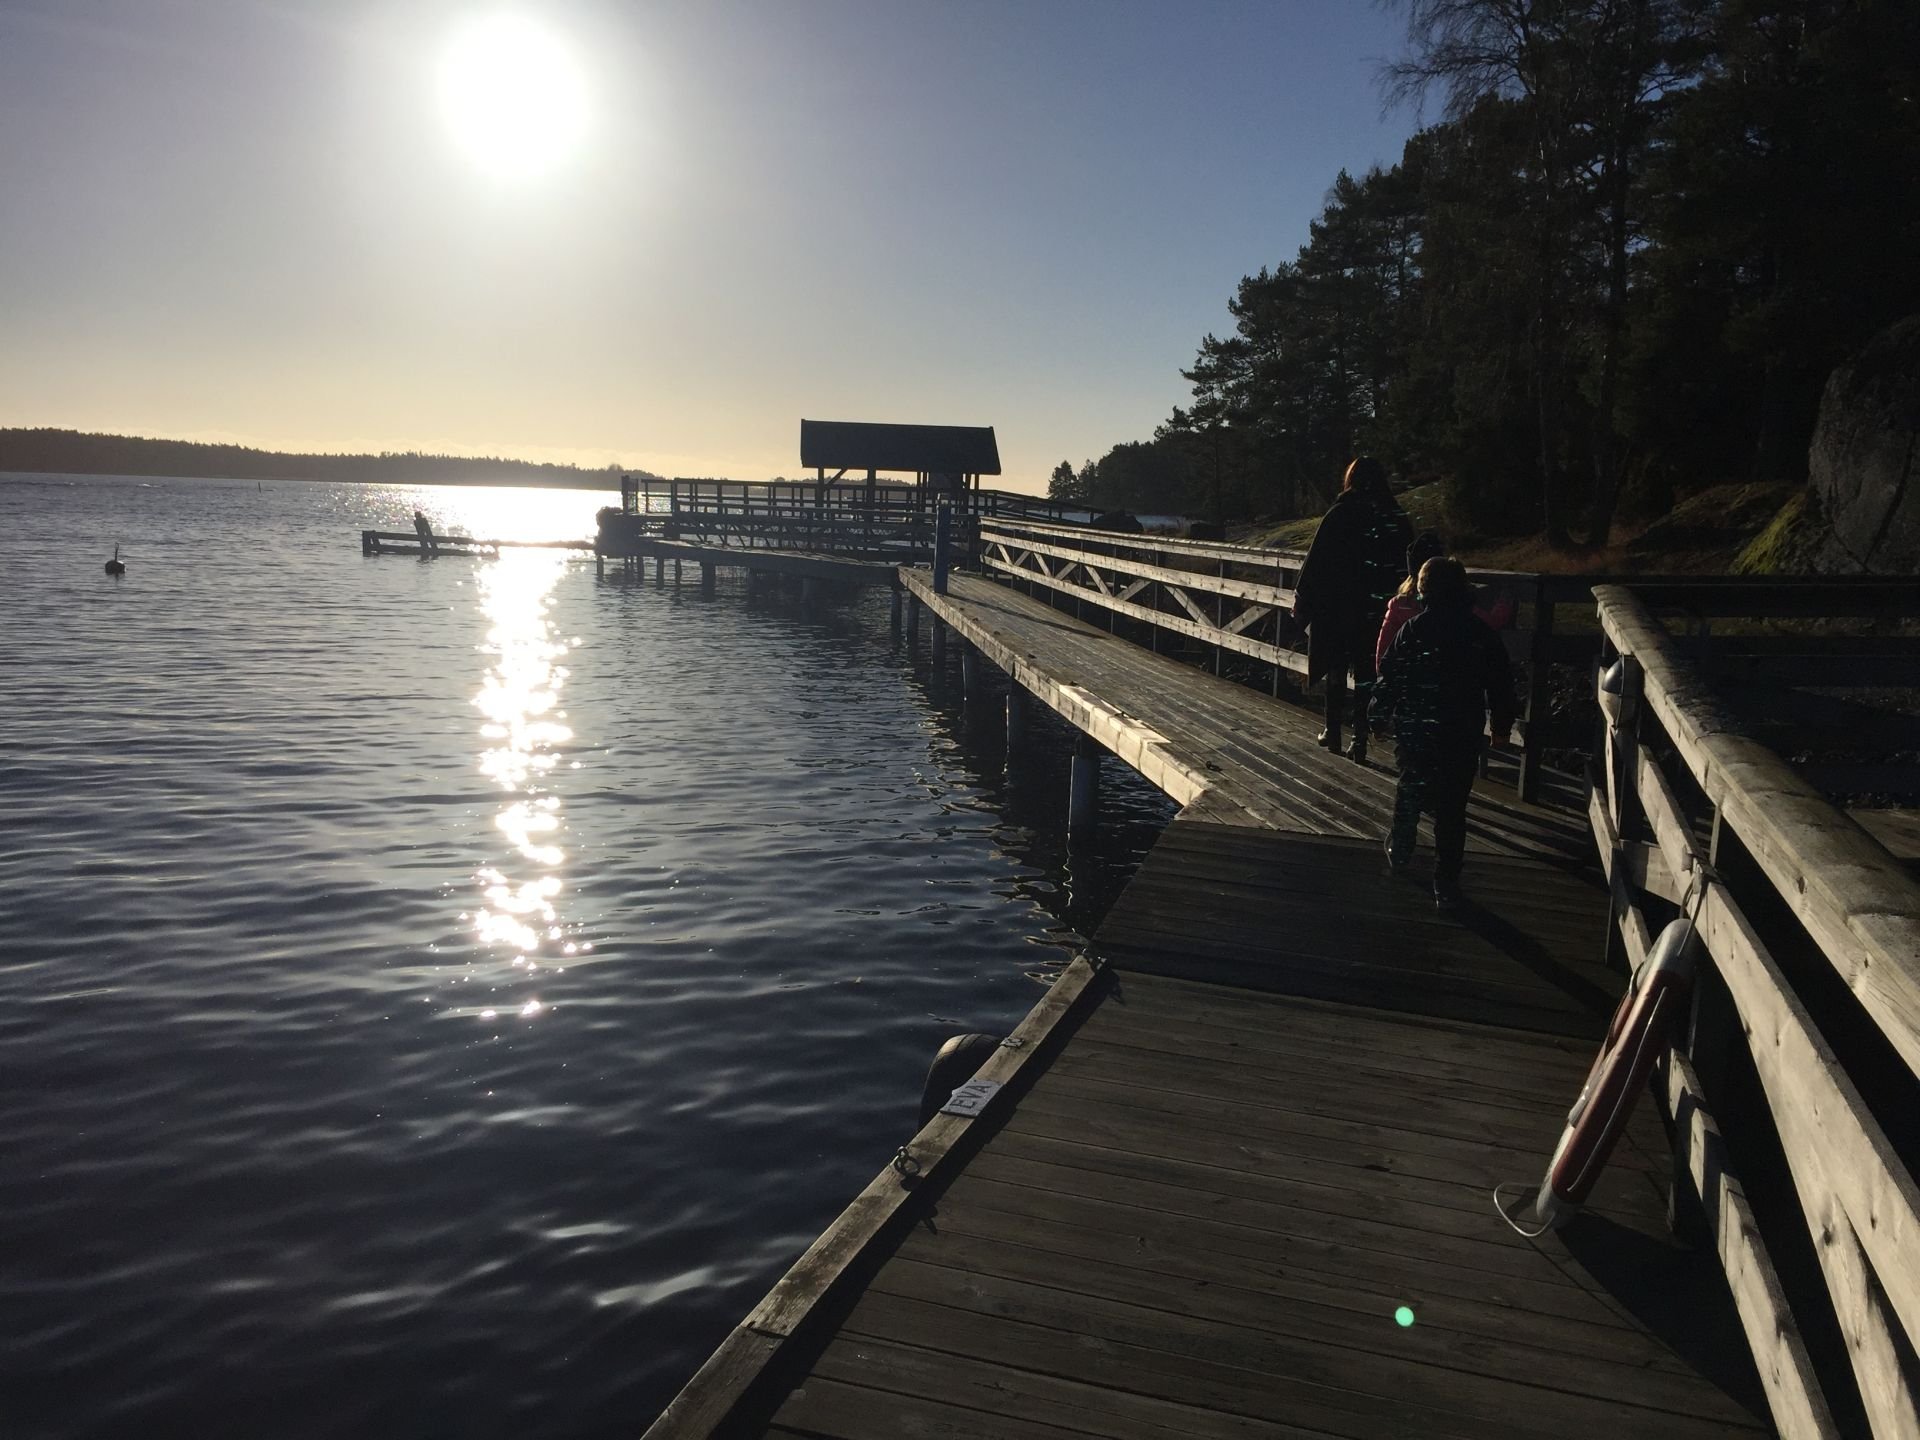 Launch ramps at Duse Udde, Lake Vänern